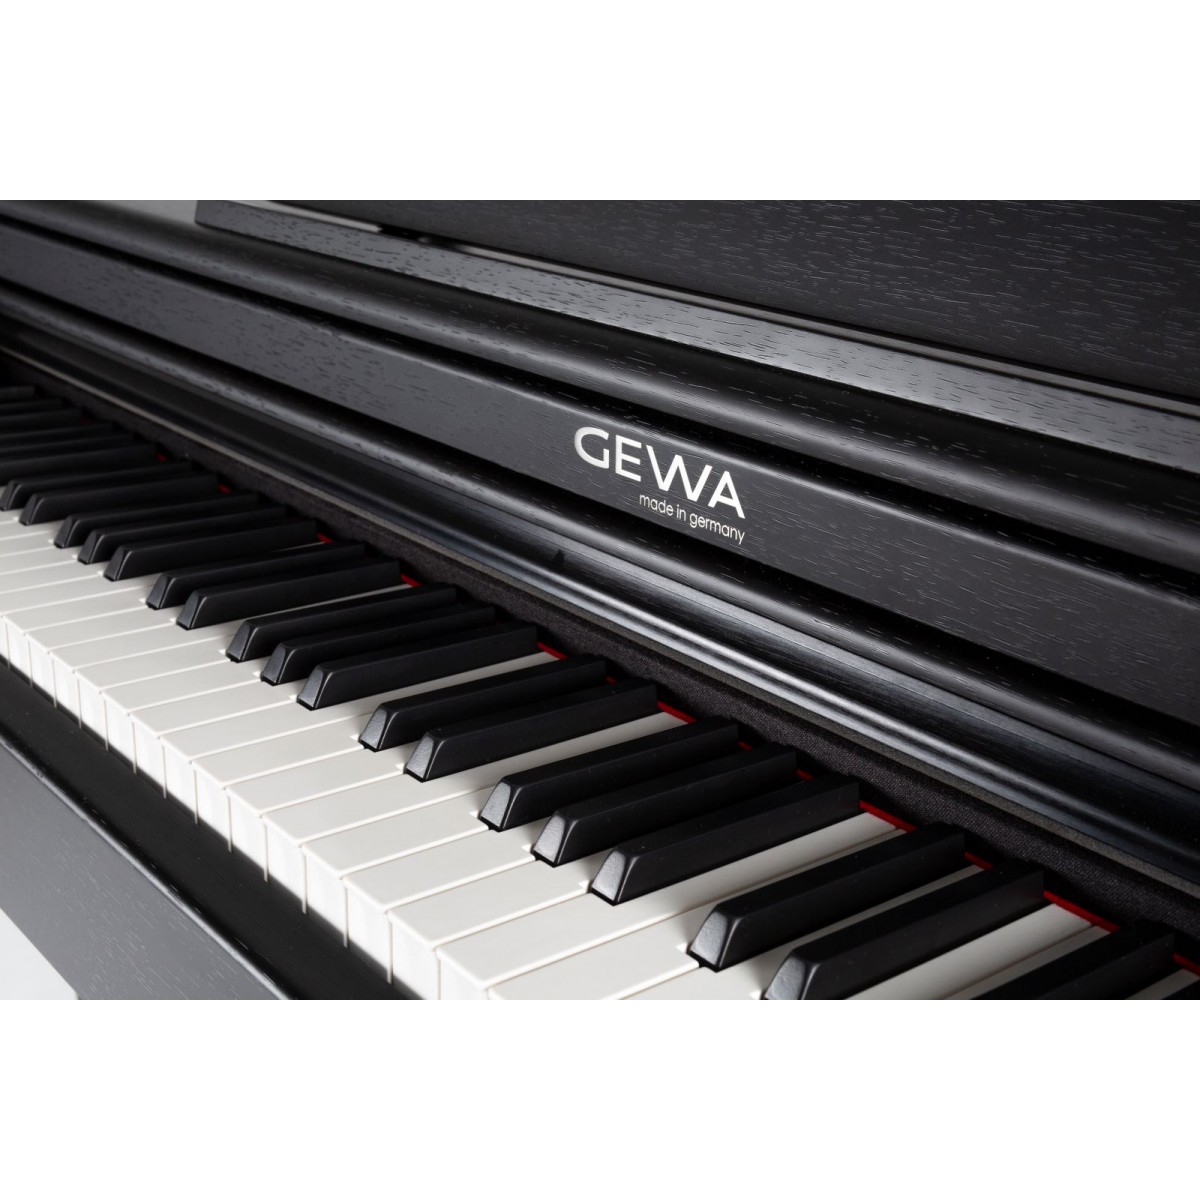 GEWA UP-360 G Digital Piano schwarz